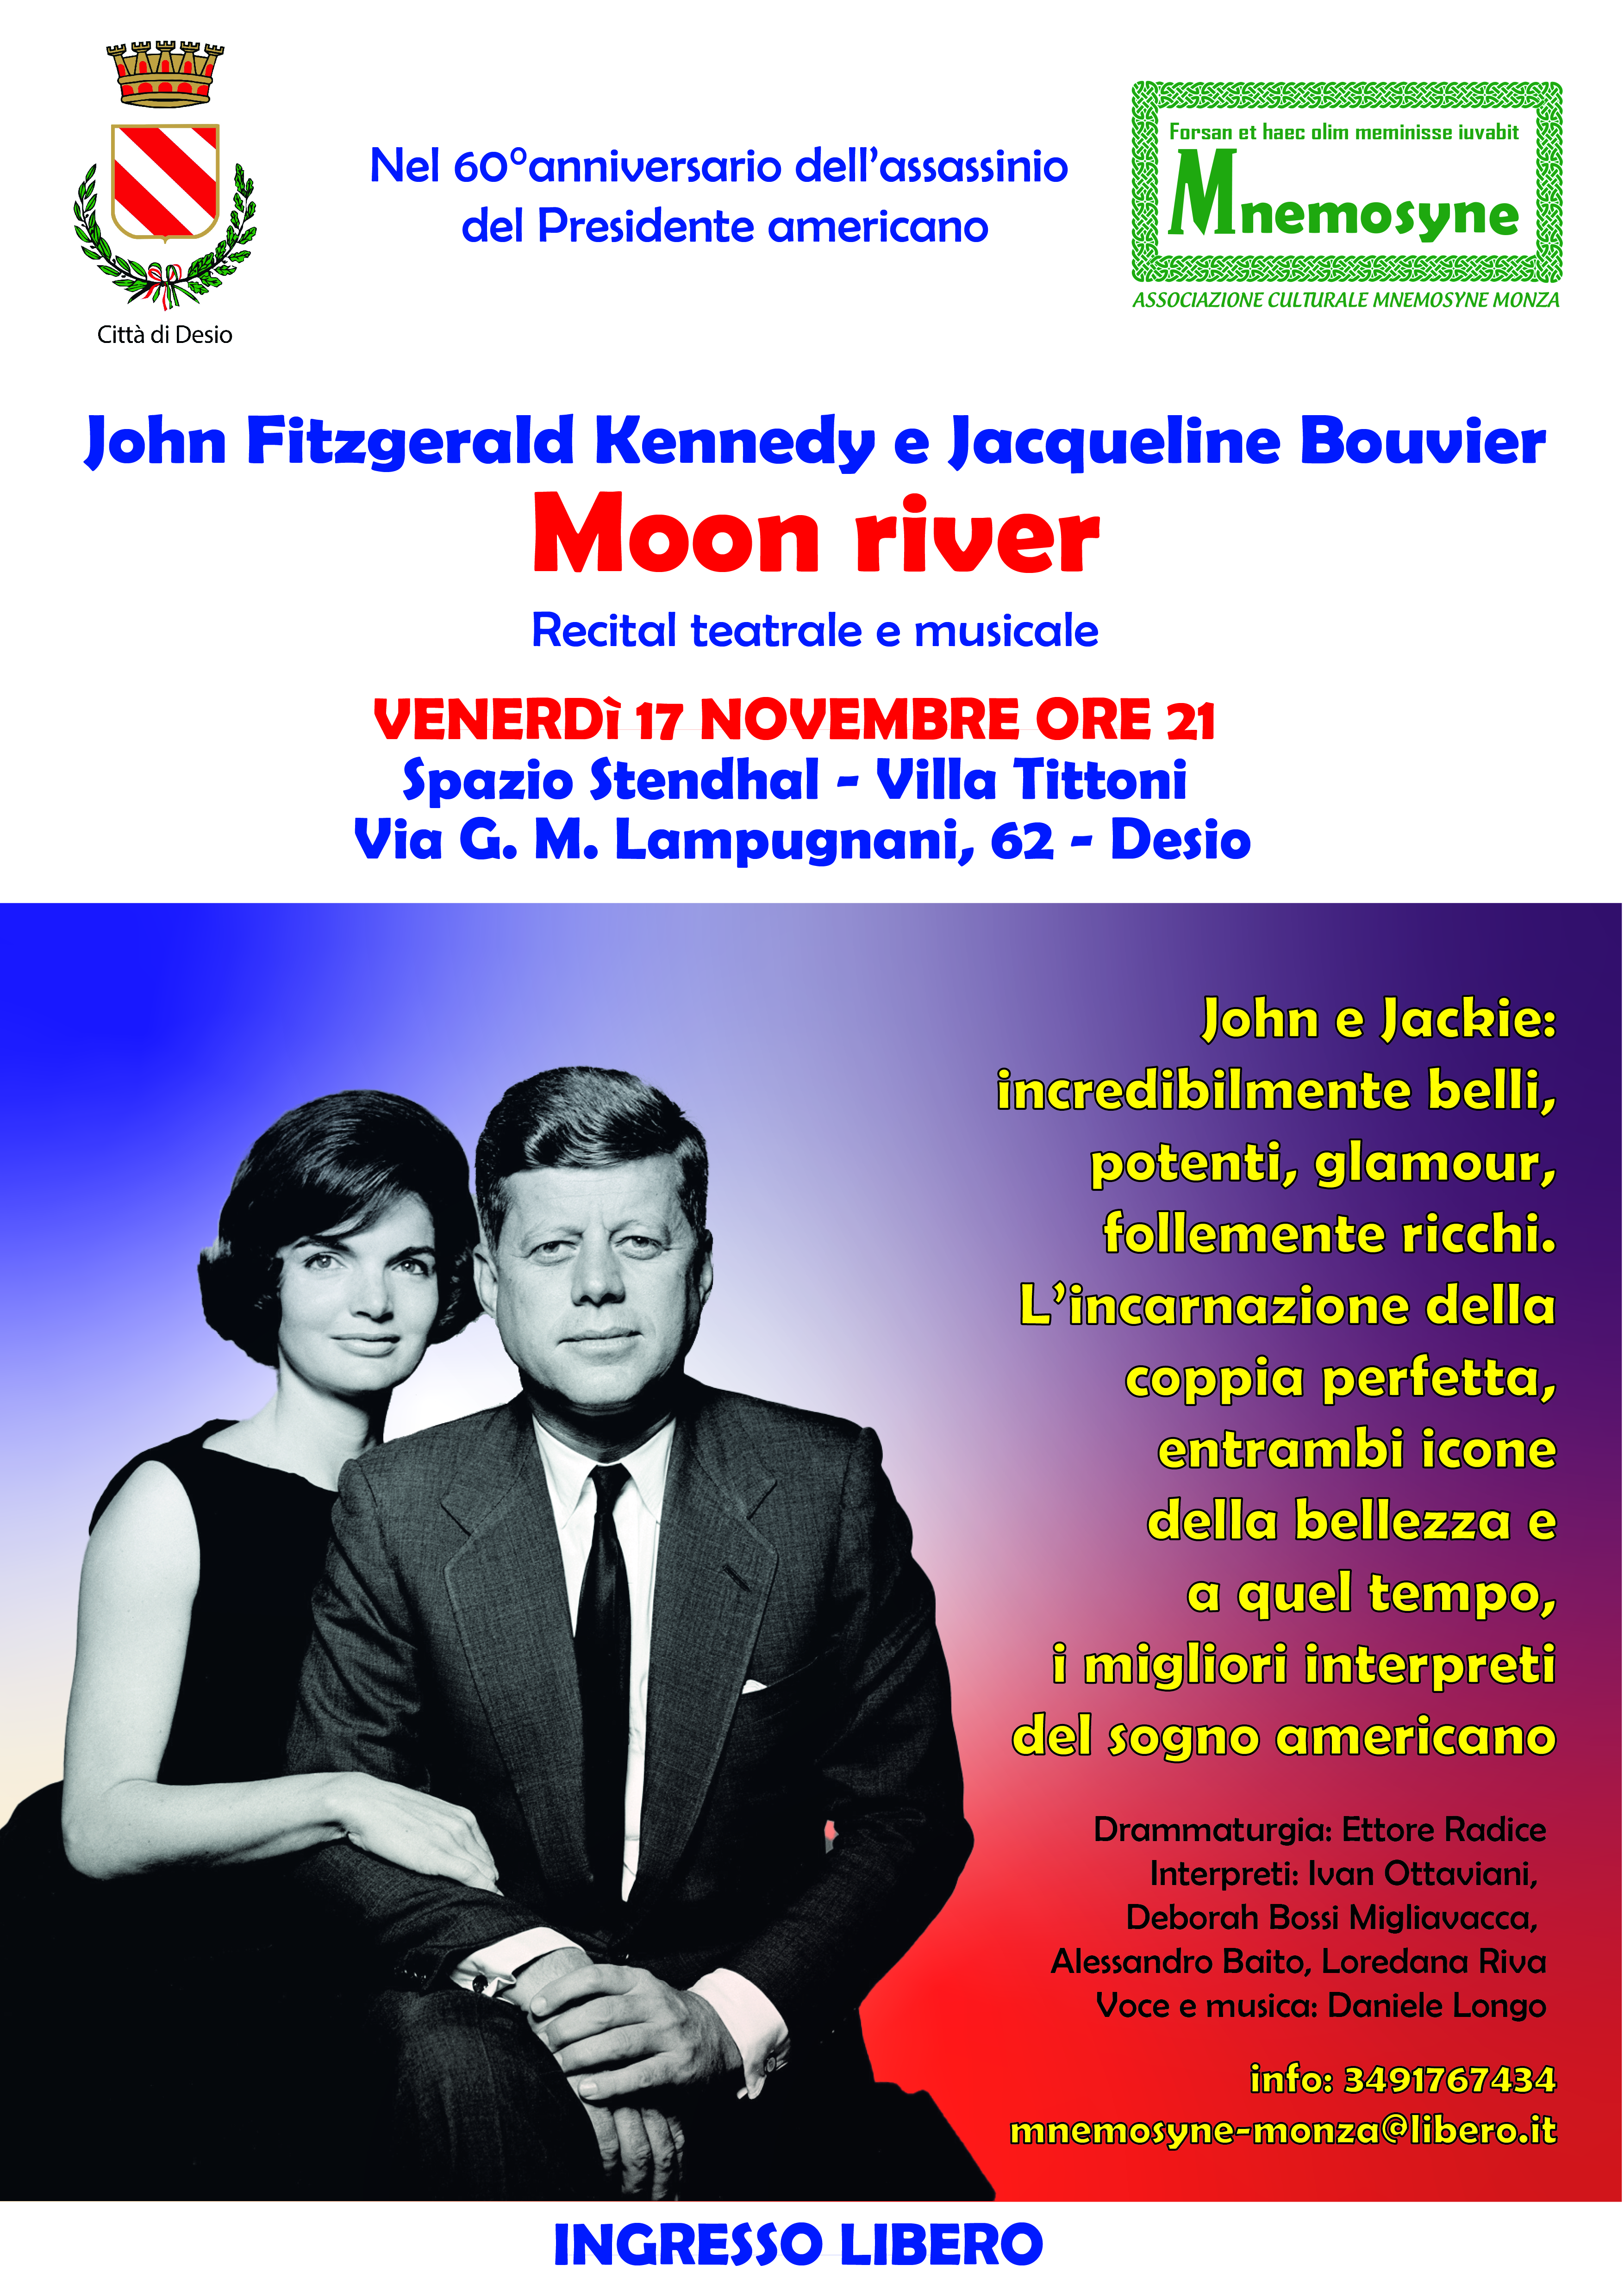 John Fitzgerald Kennedy e Jacqueline Bouvier Moon river